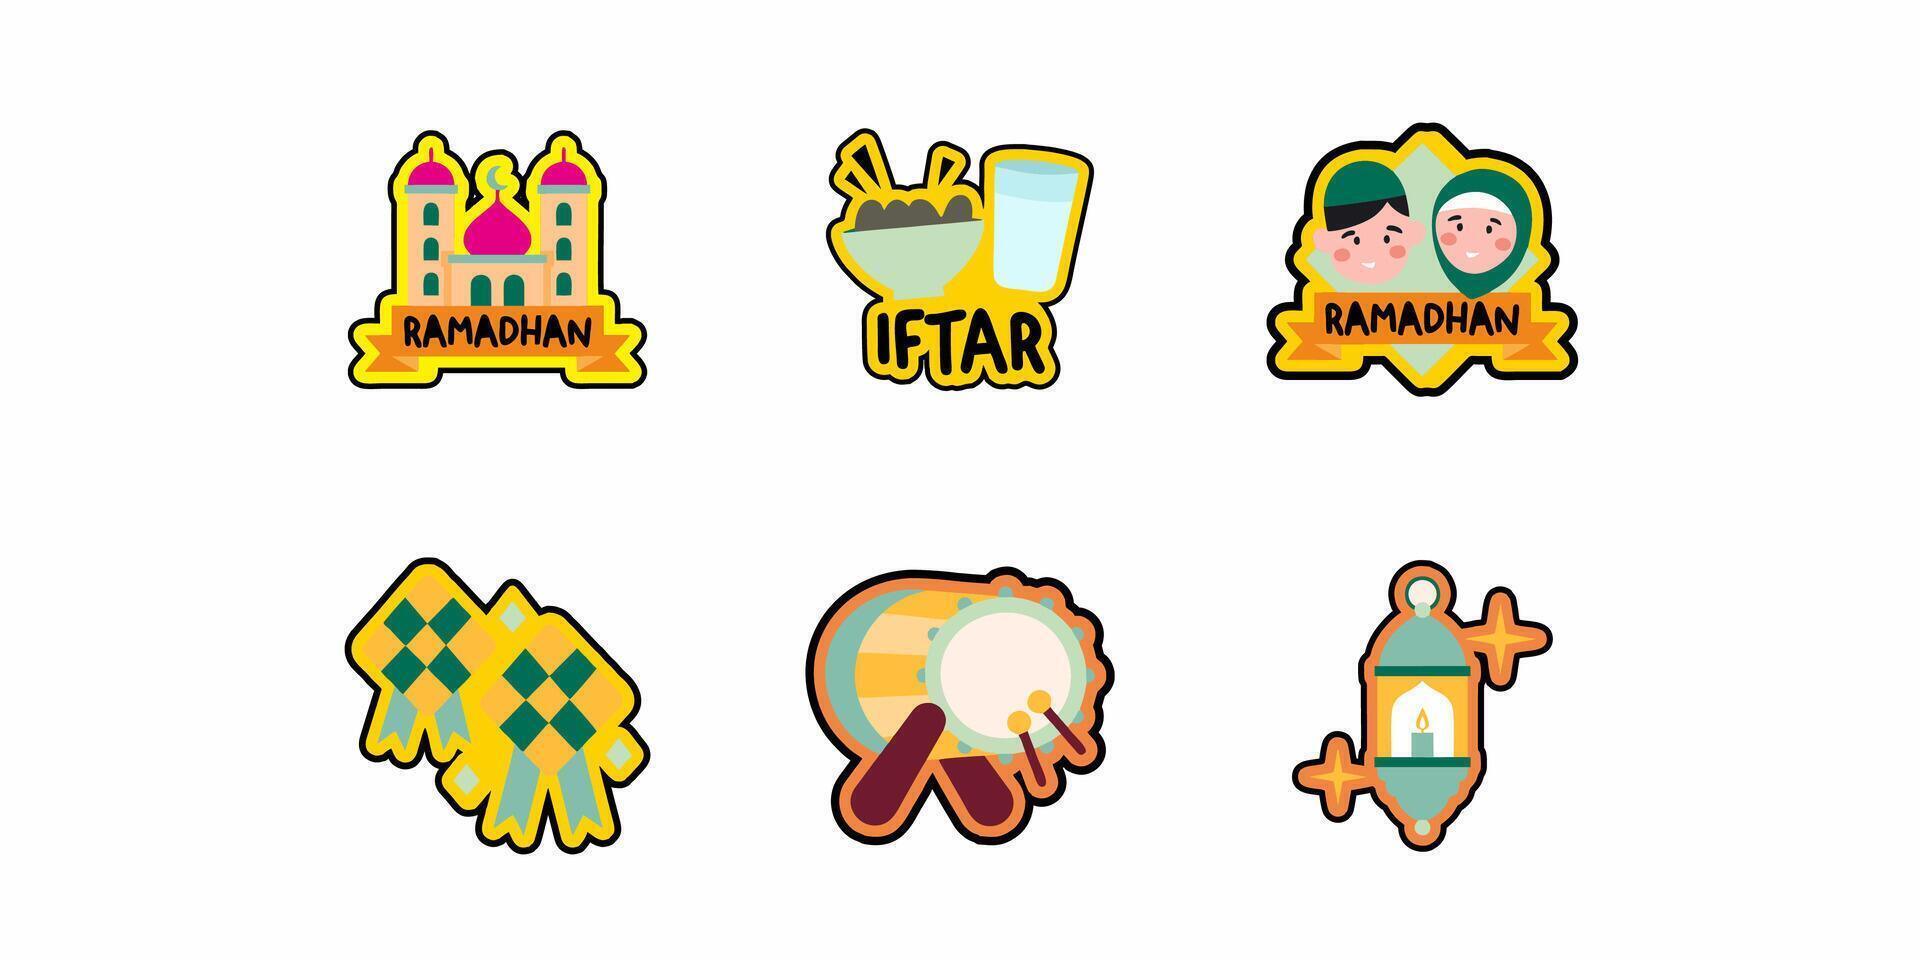 Ramadan illustration character stickers vector